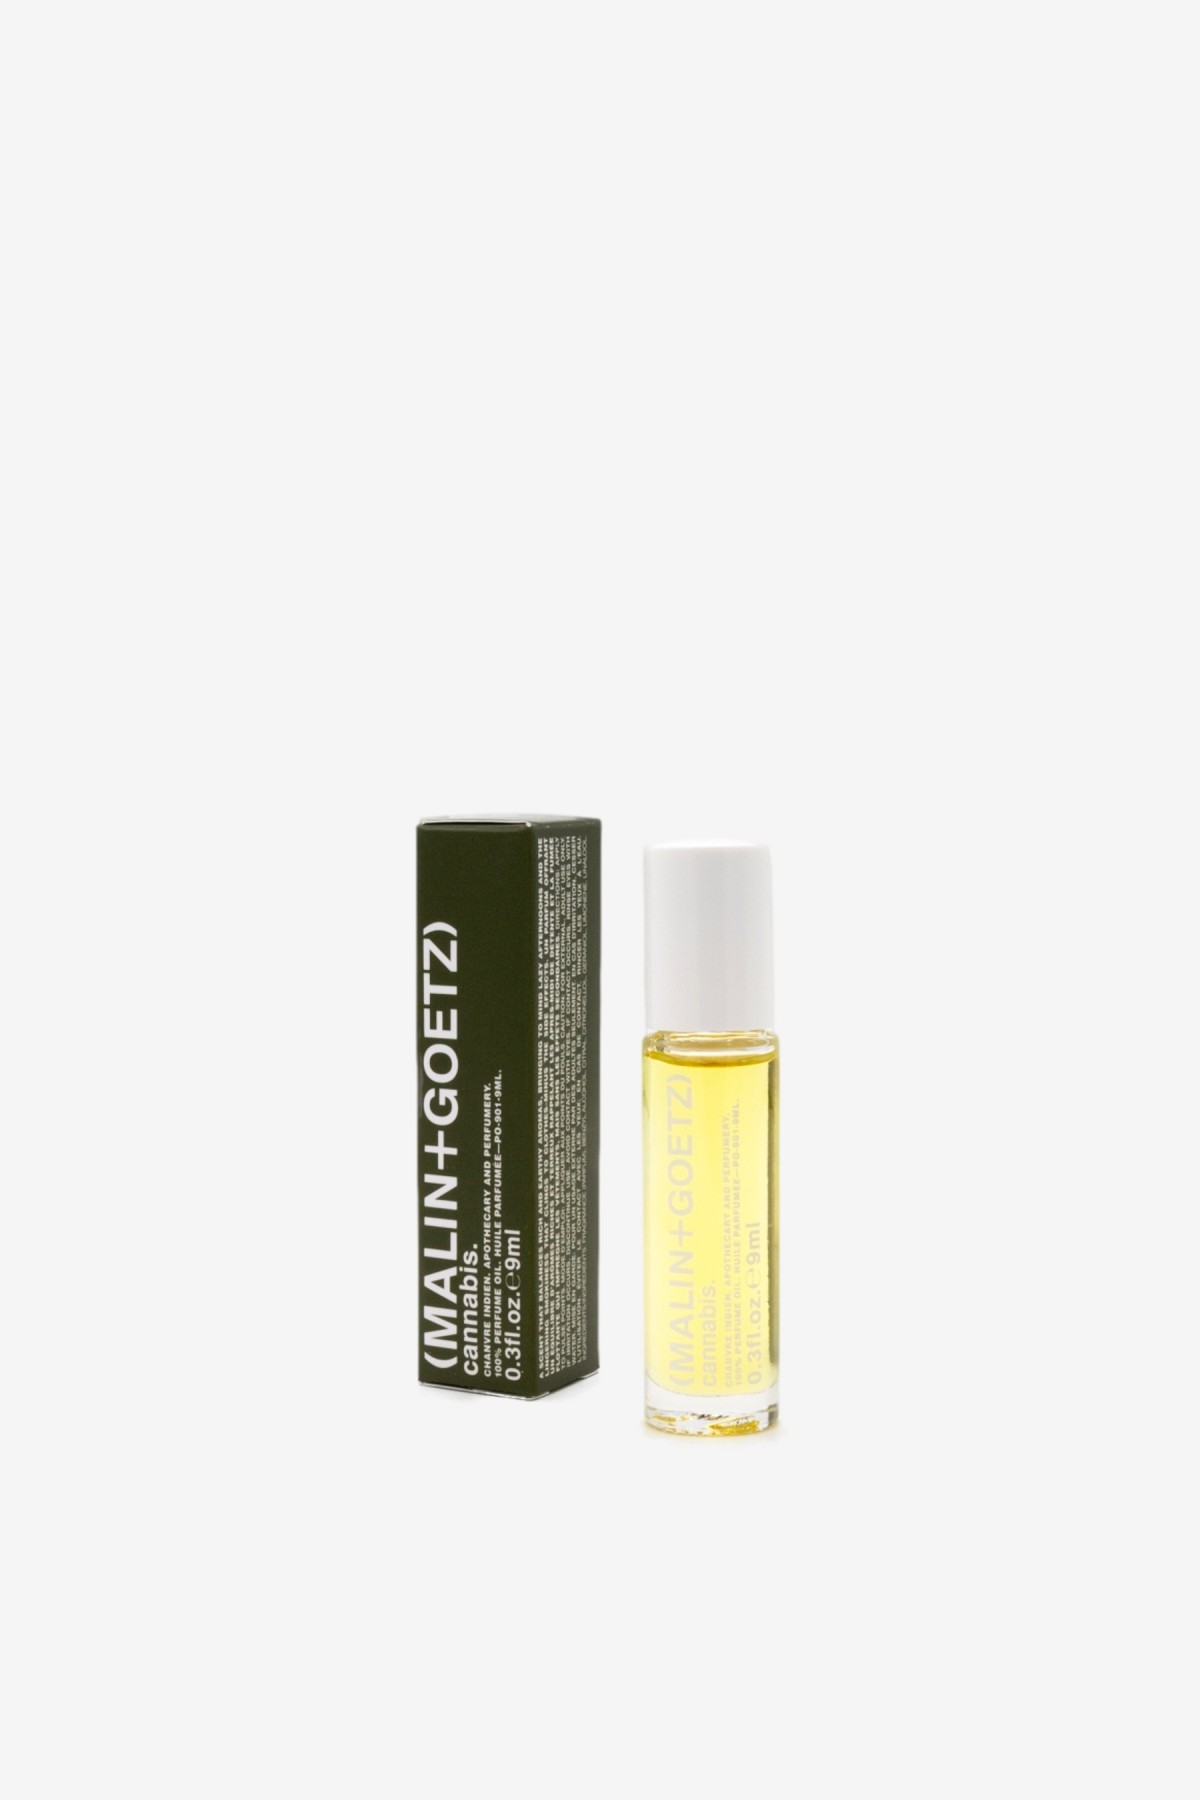 Malin+Goetz Cannabis Perfume Oil 9ml in 